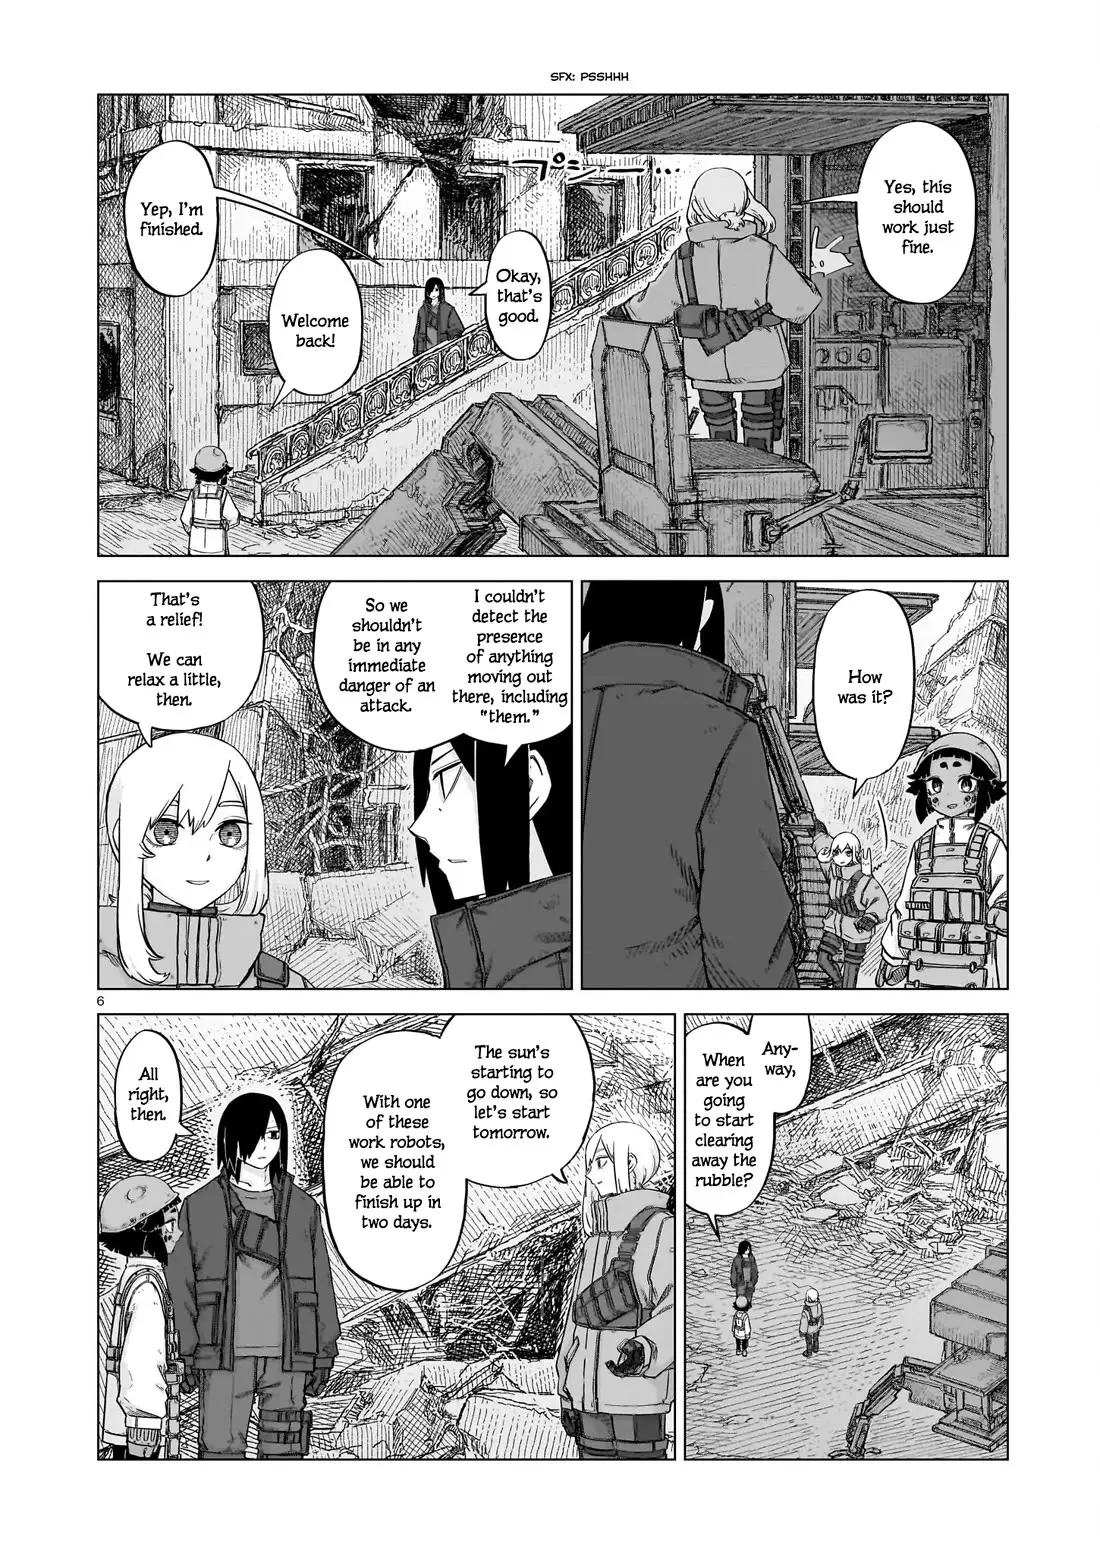 Usuzumi No Hate - 20 page 5-0ec9319d